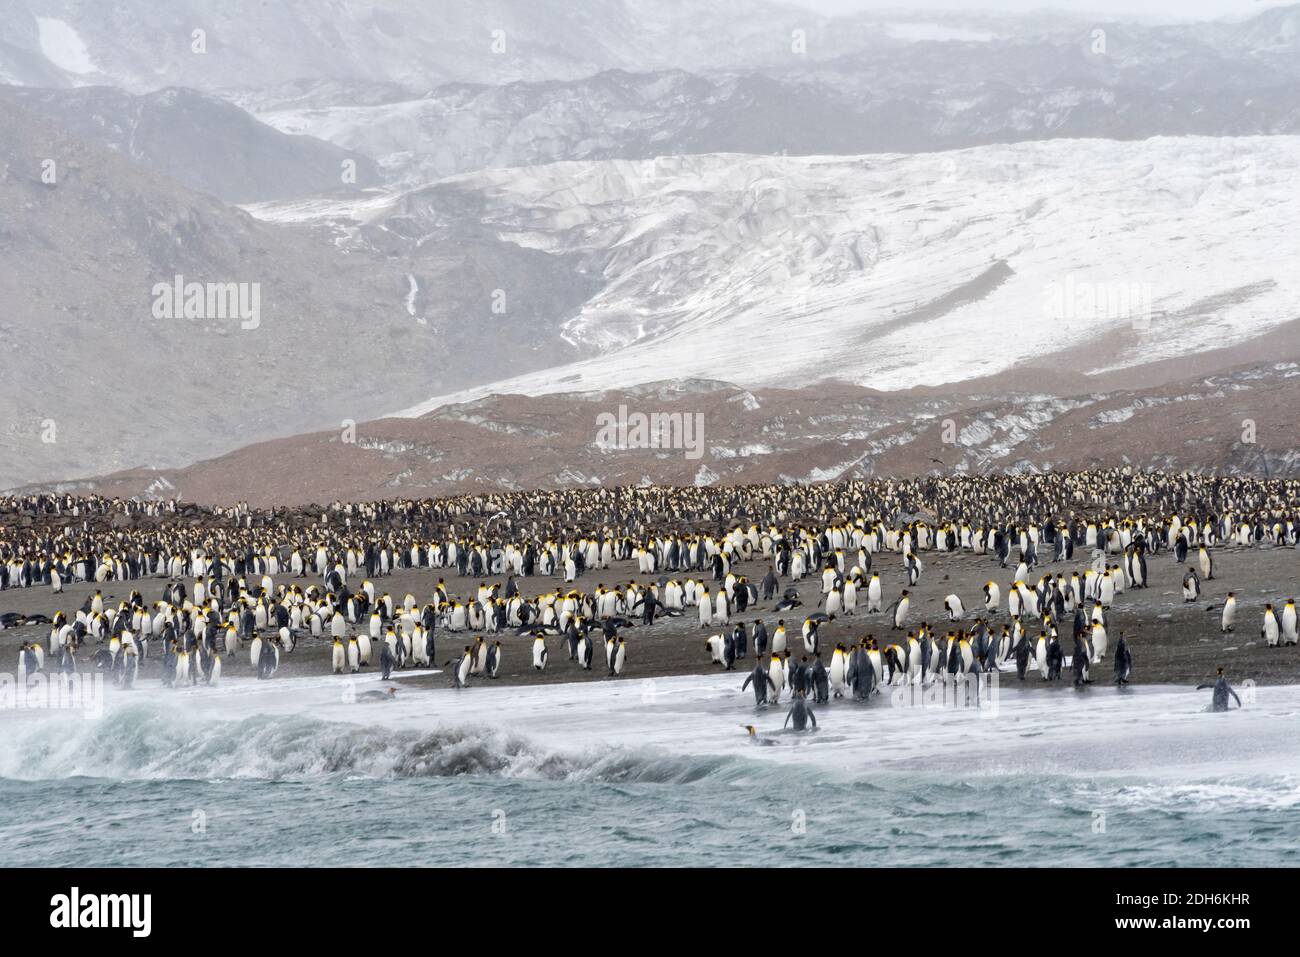 King penguins on the beach, St. Andrews Bay, South Georgia, Antarctica Stock Photo